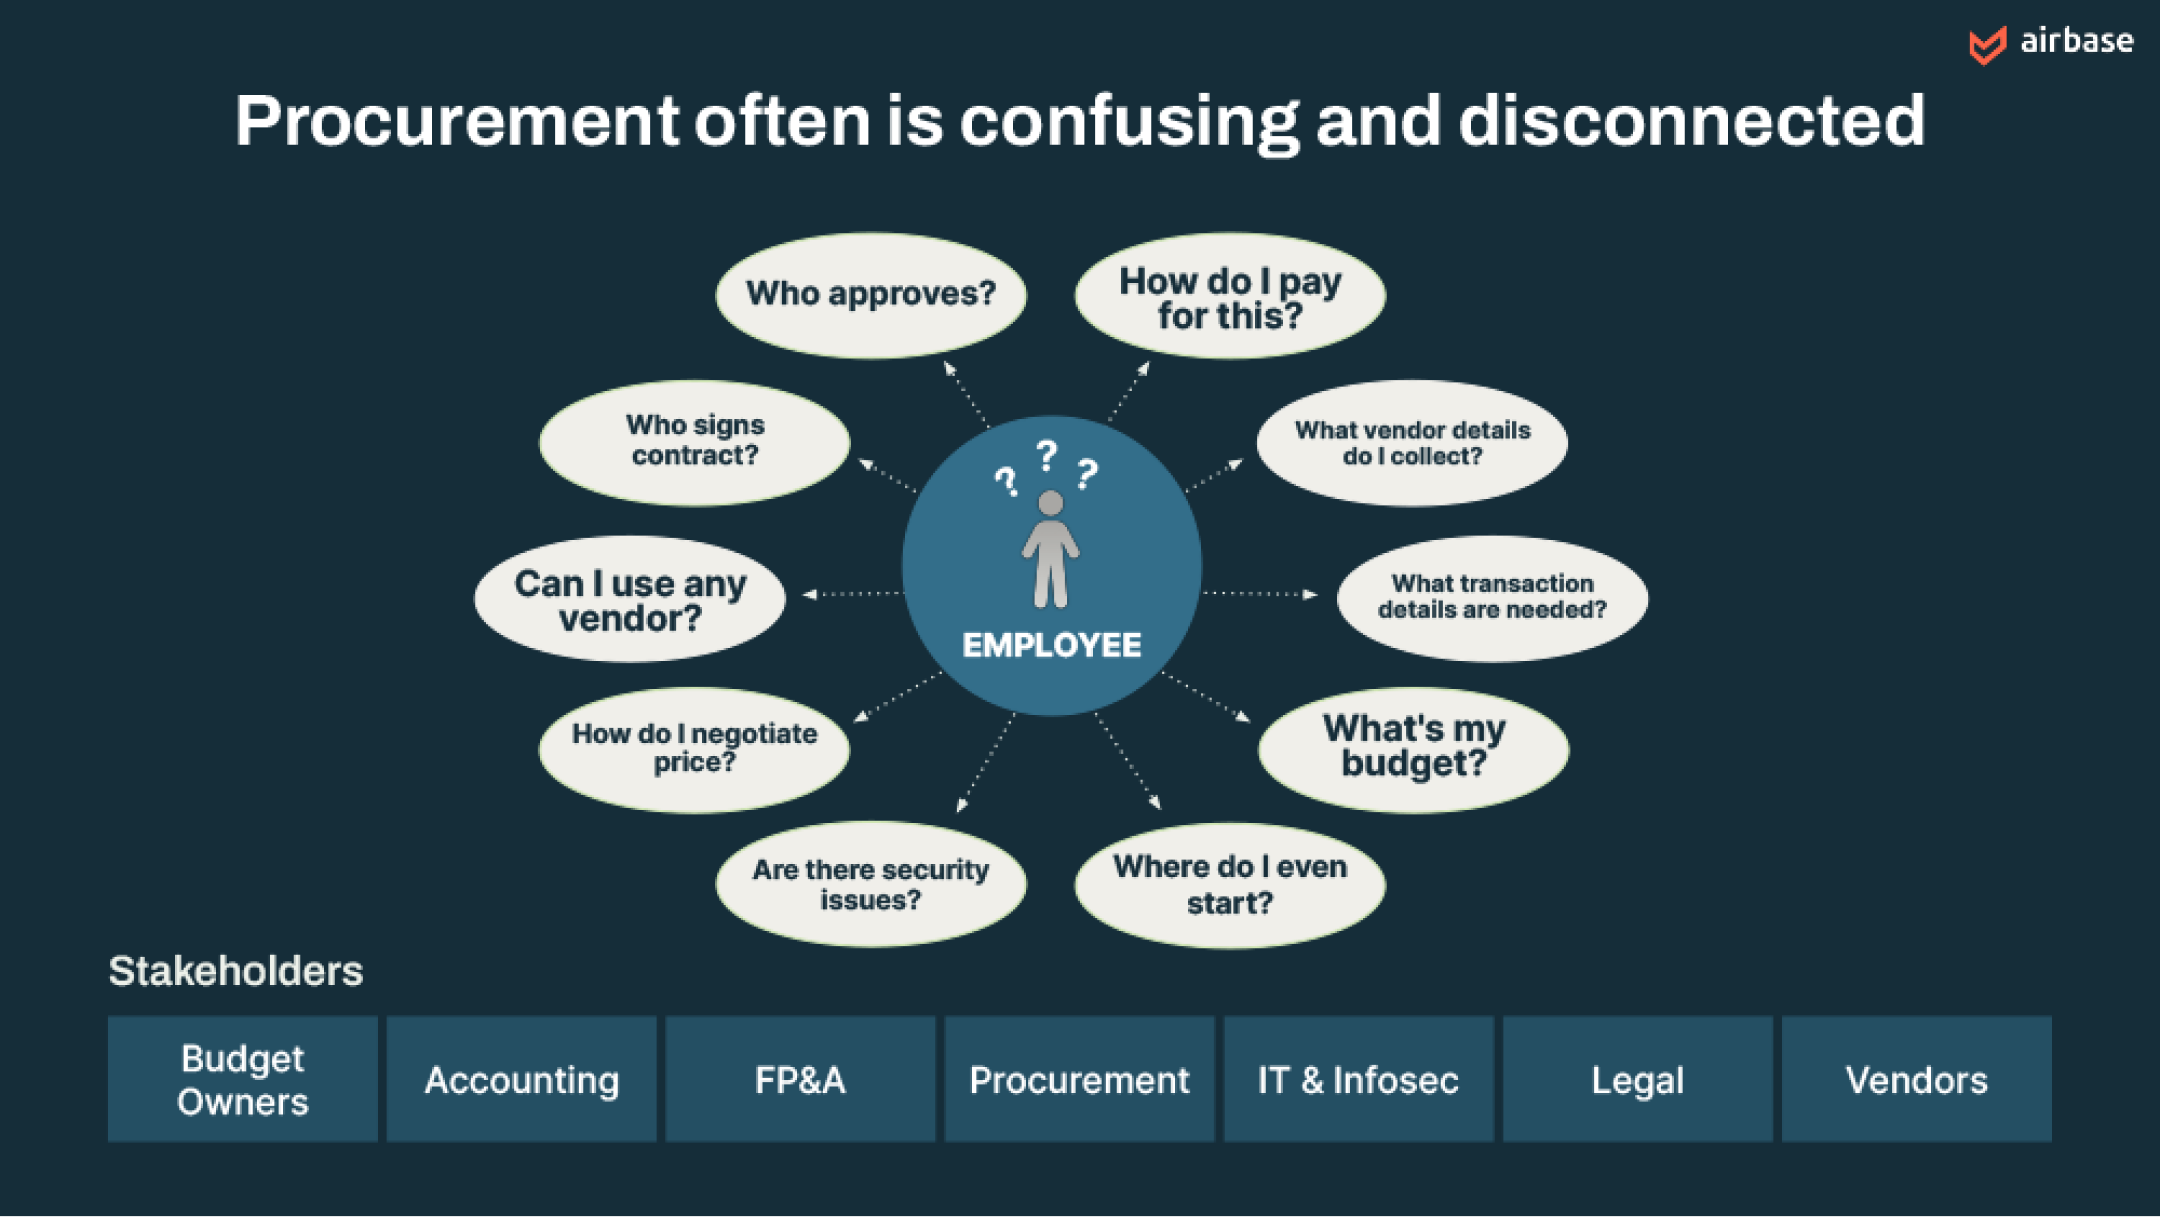 The components of procurement